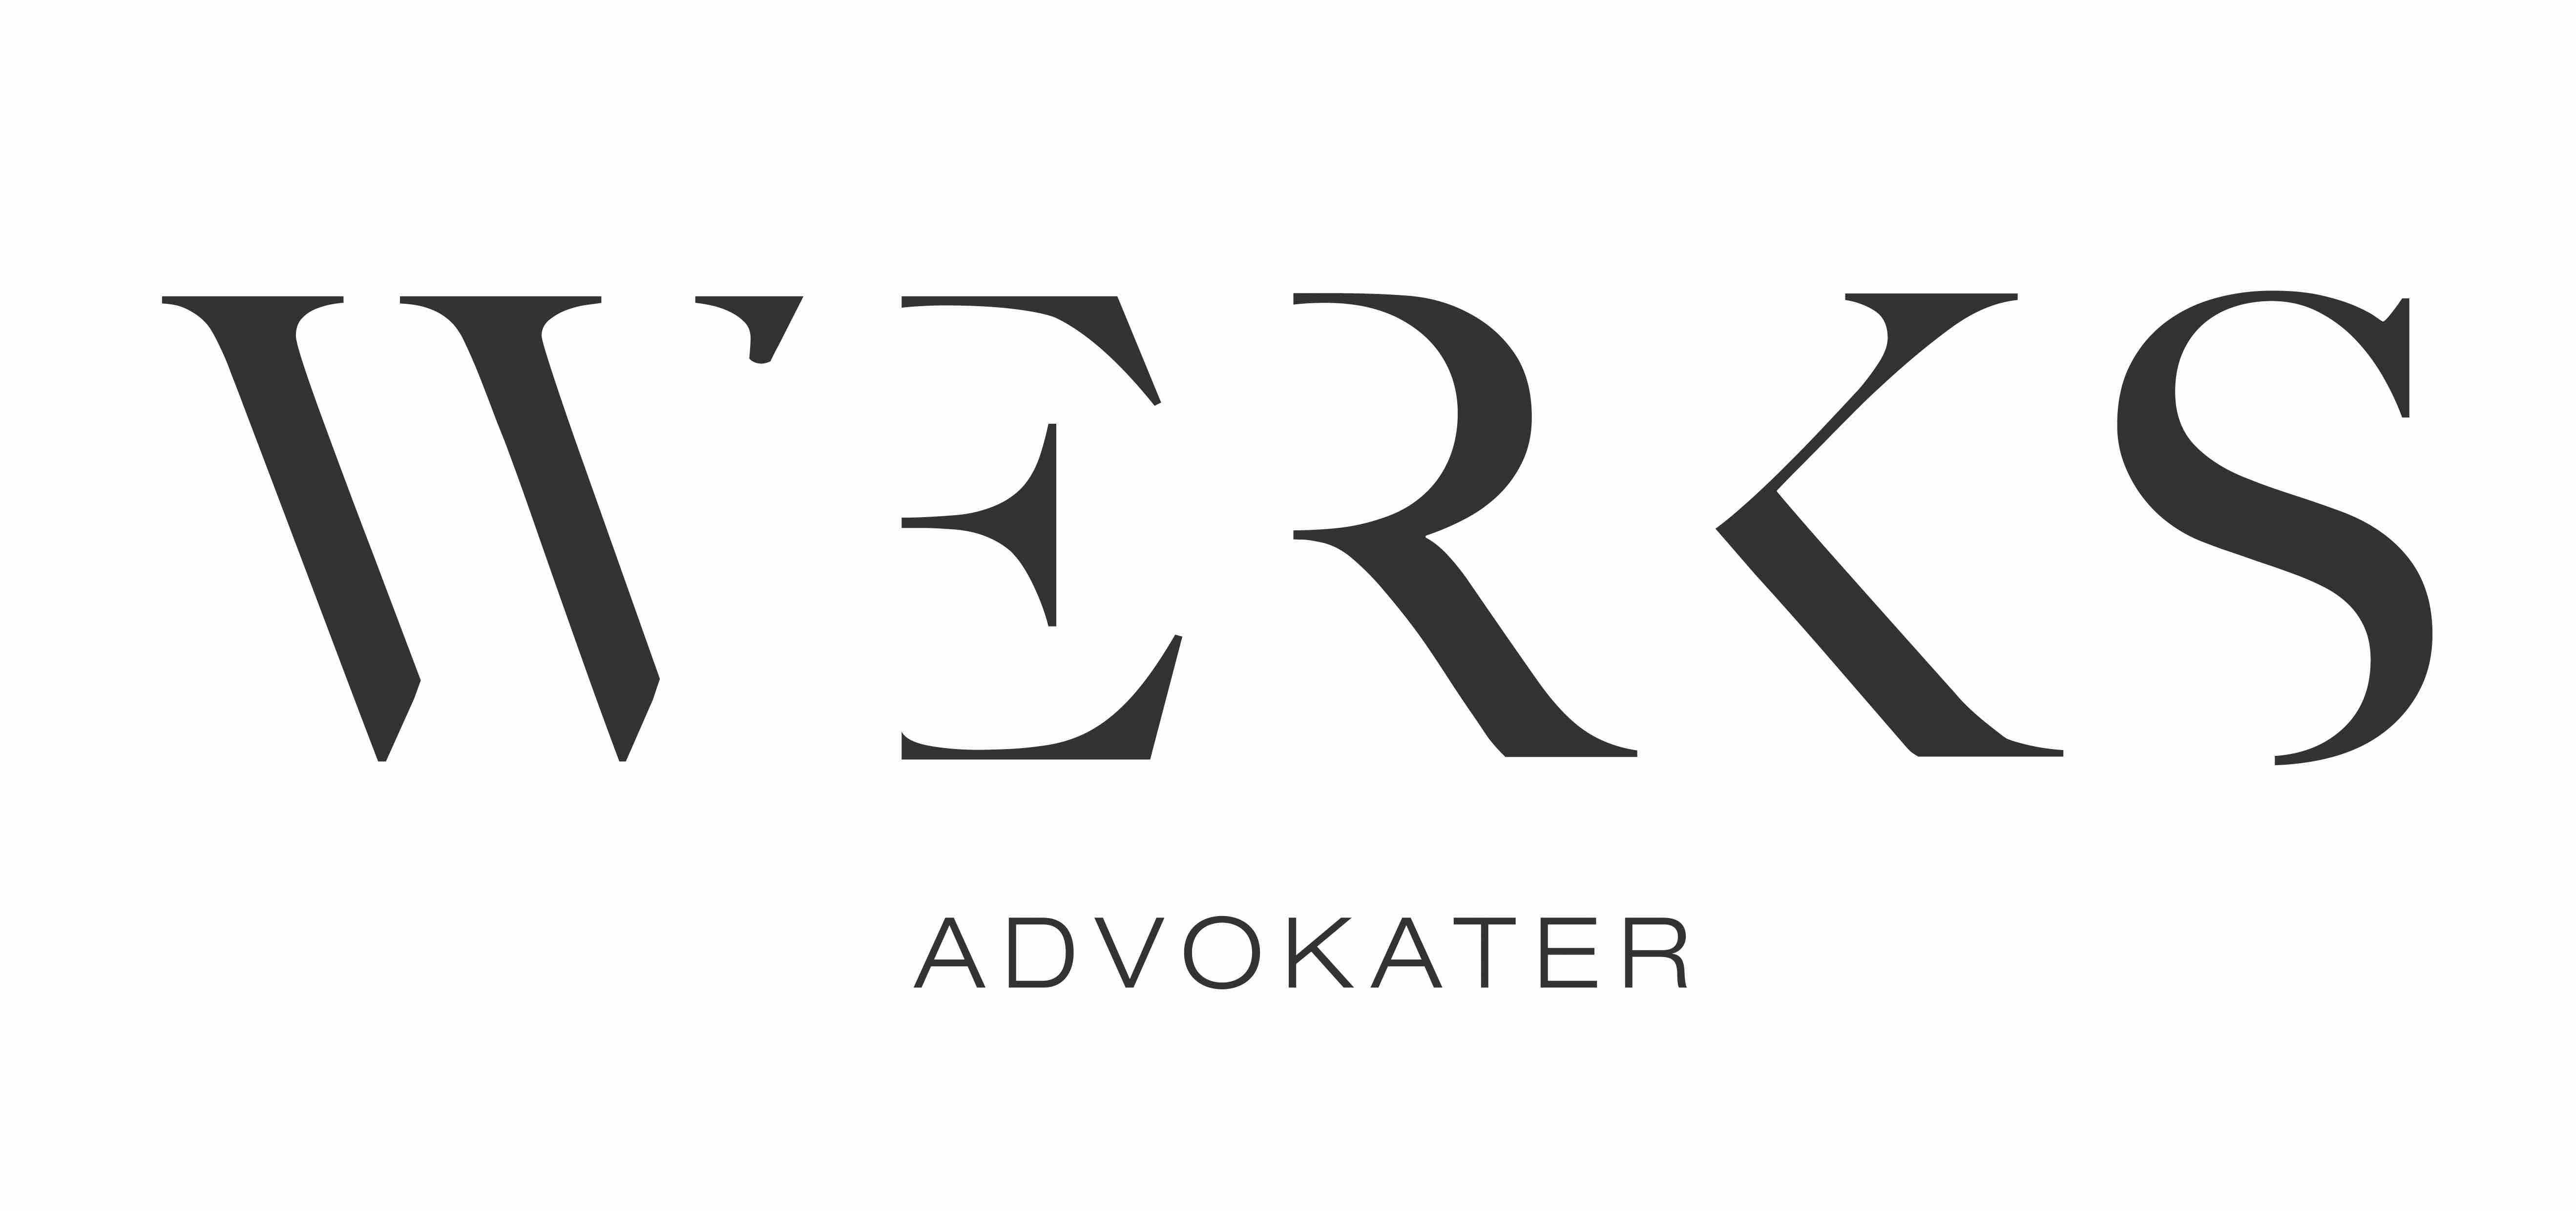 Werks Logo - Werks Logo Advokater